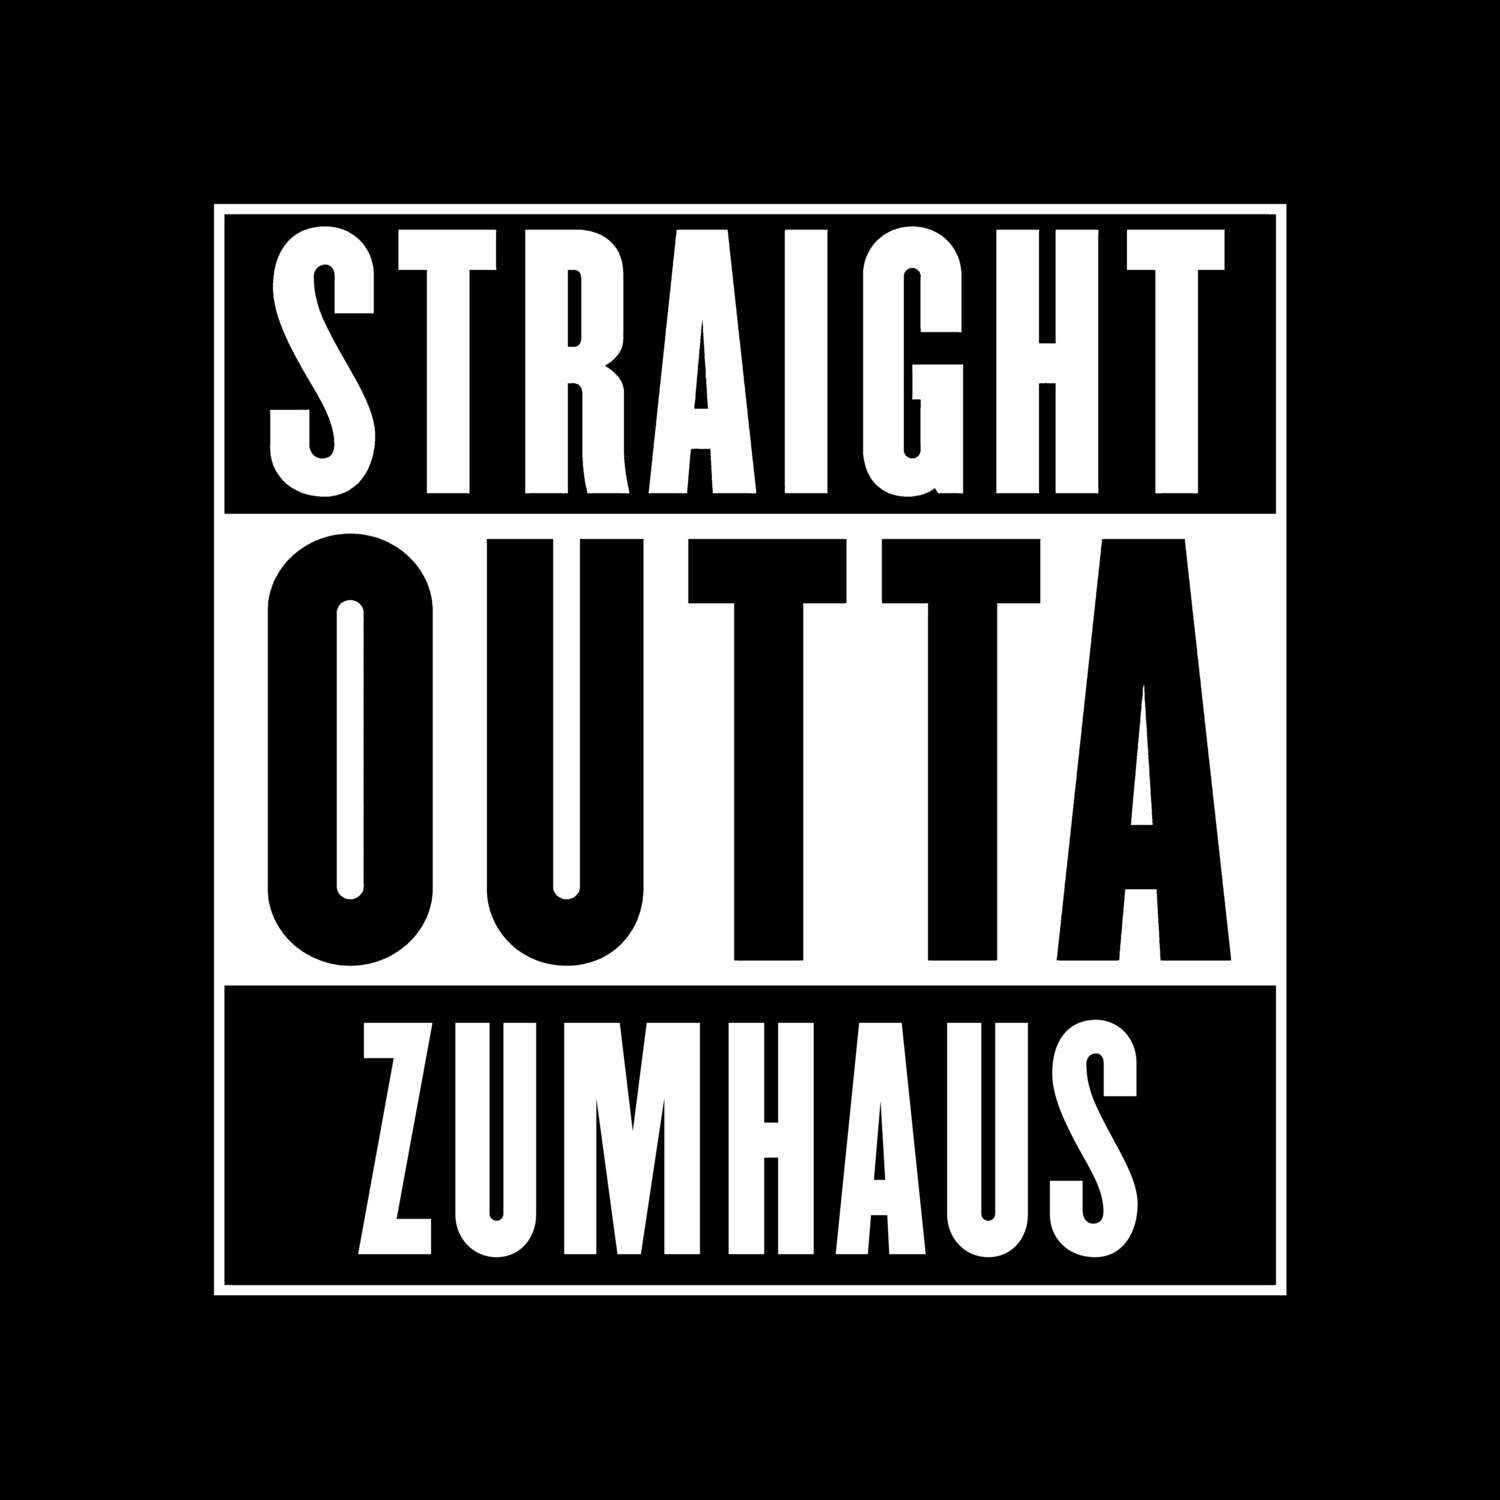 Zumhaus T-Shirt »Straight Outta«